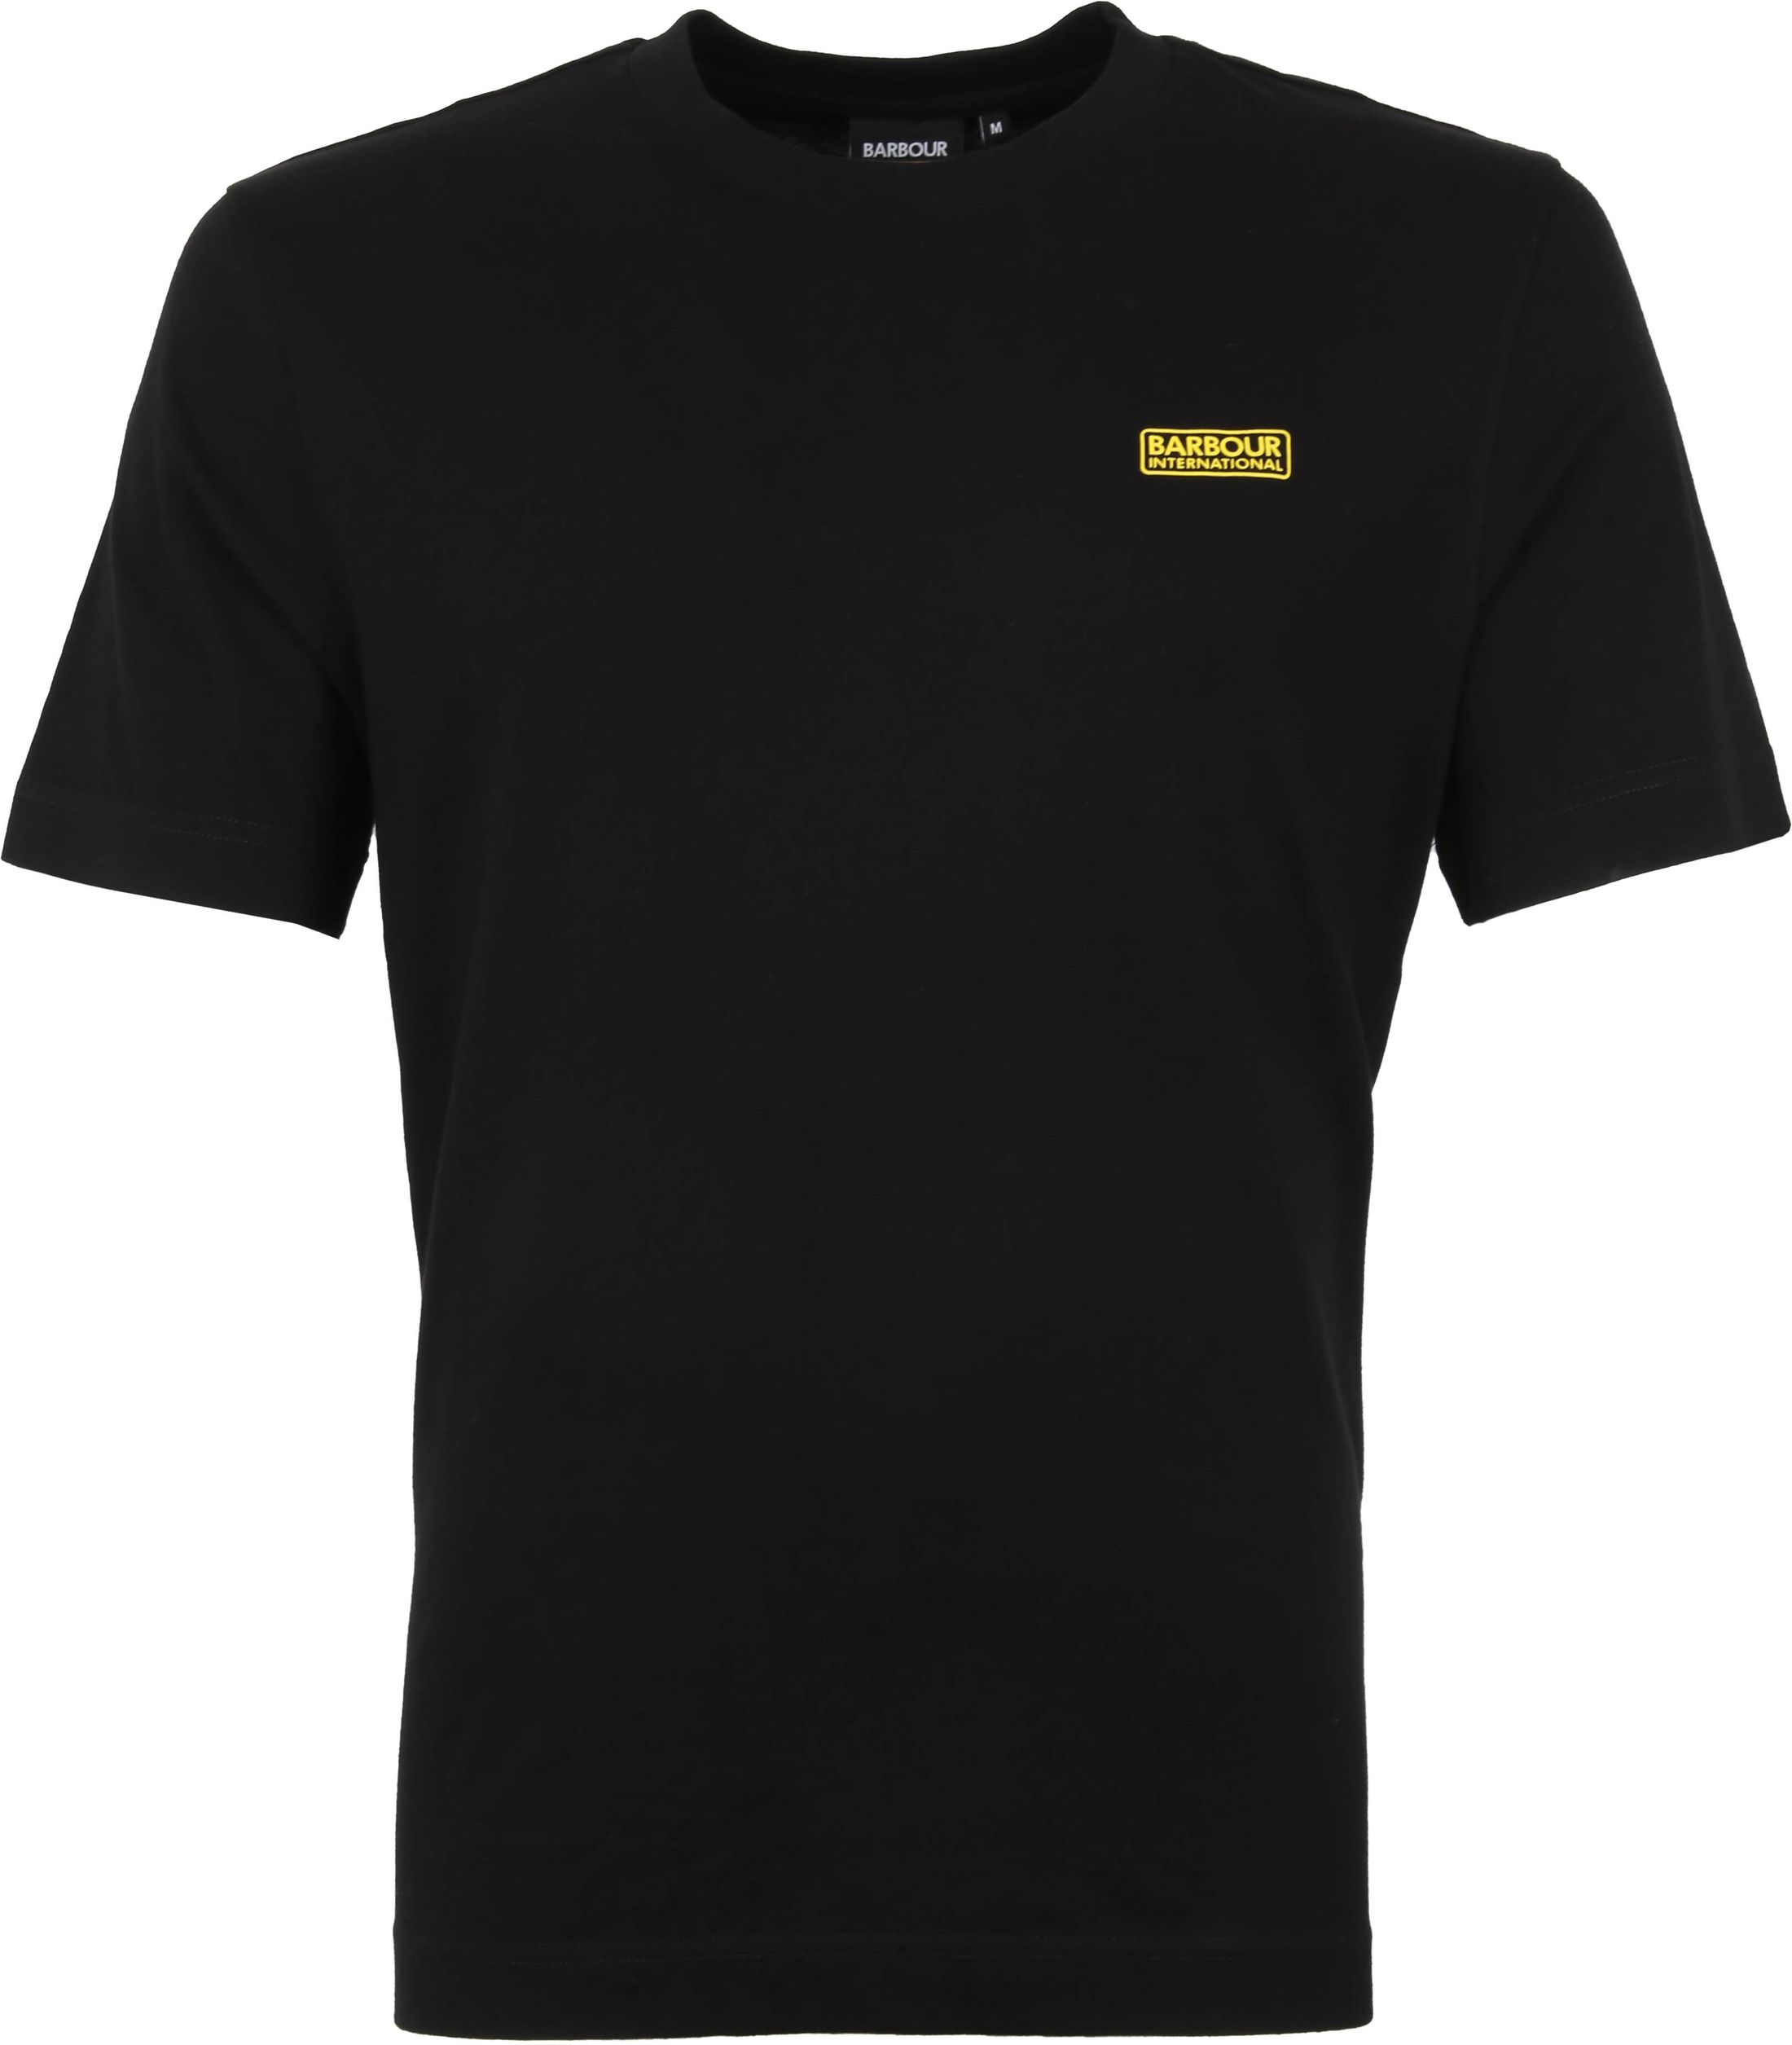 Barbour International T-shirt Black size L